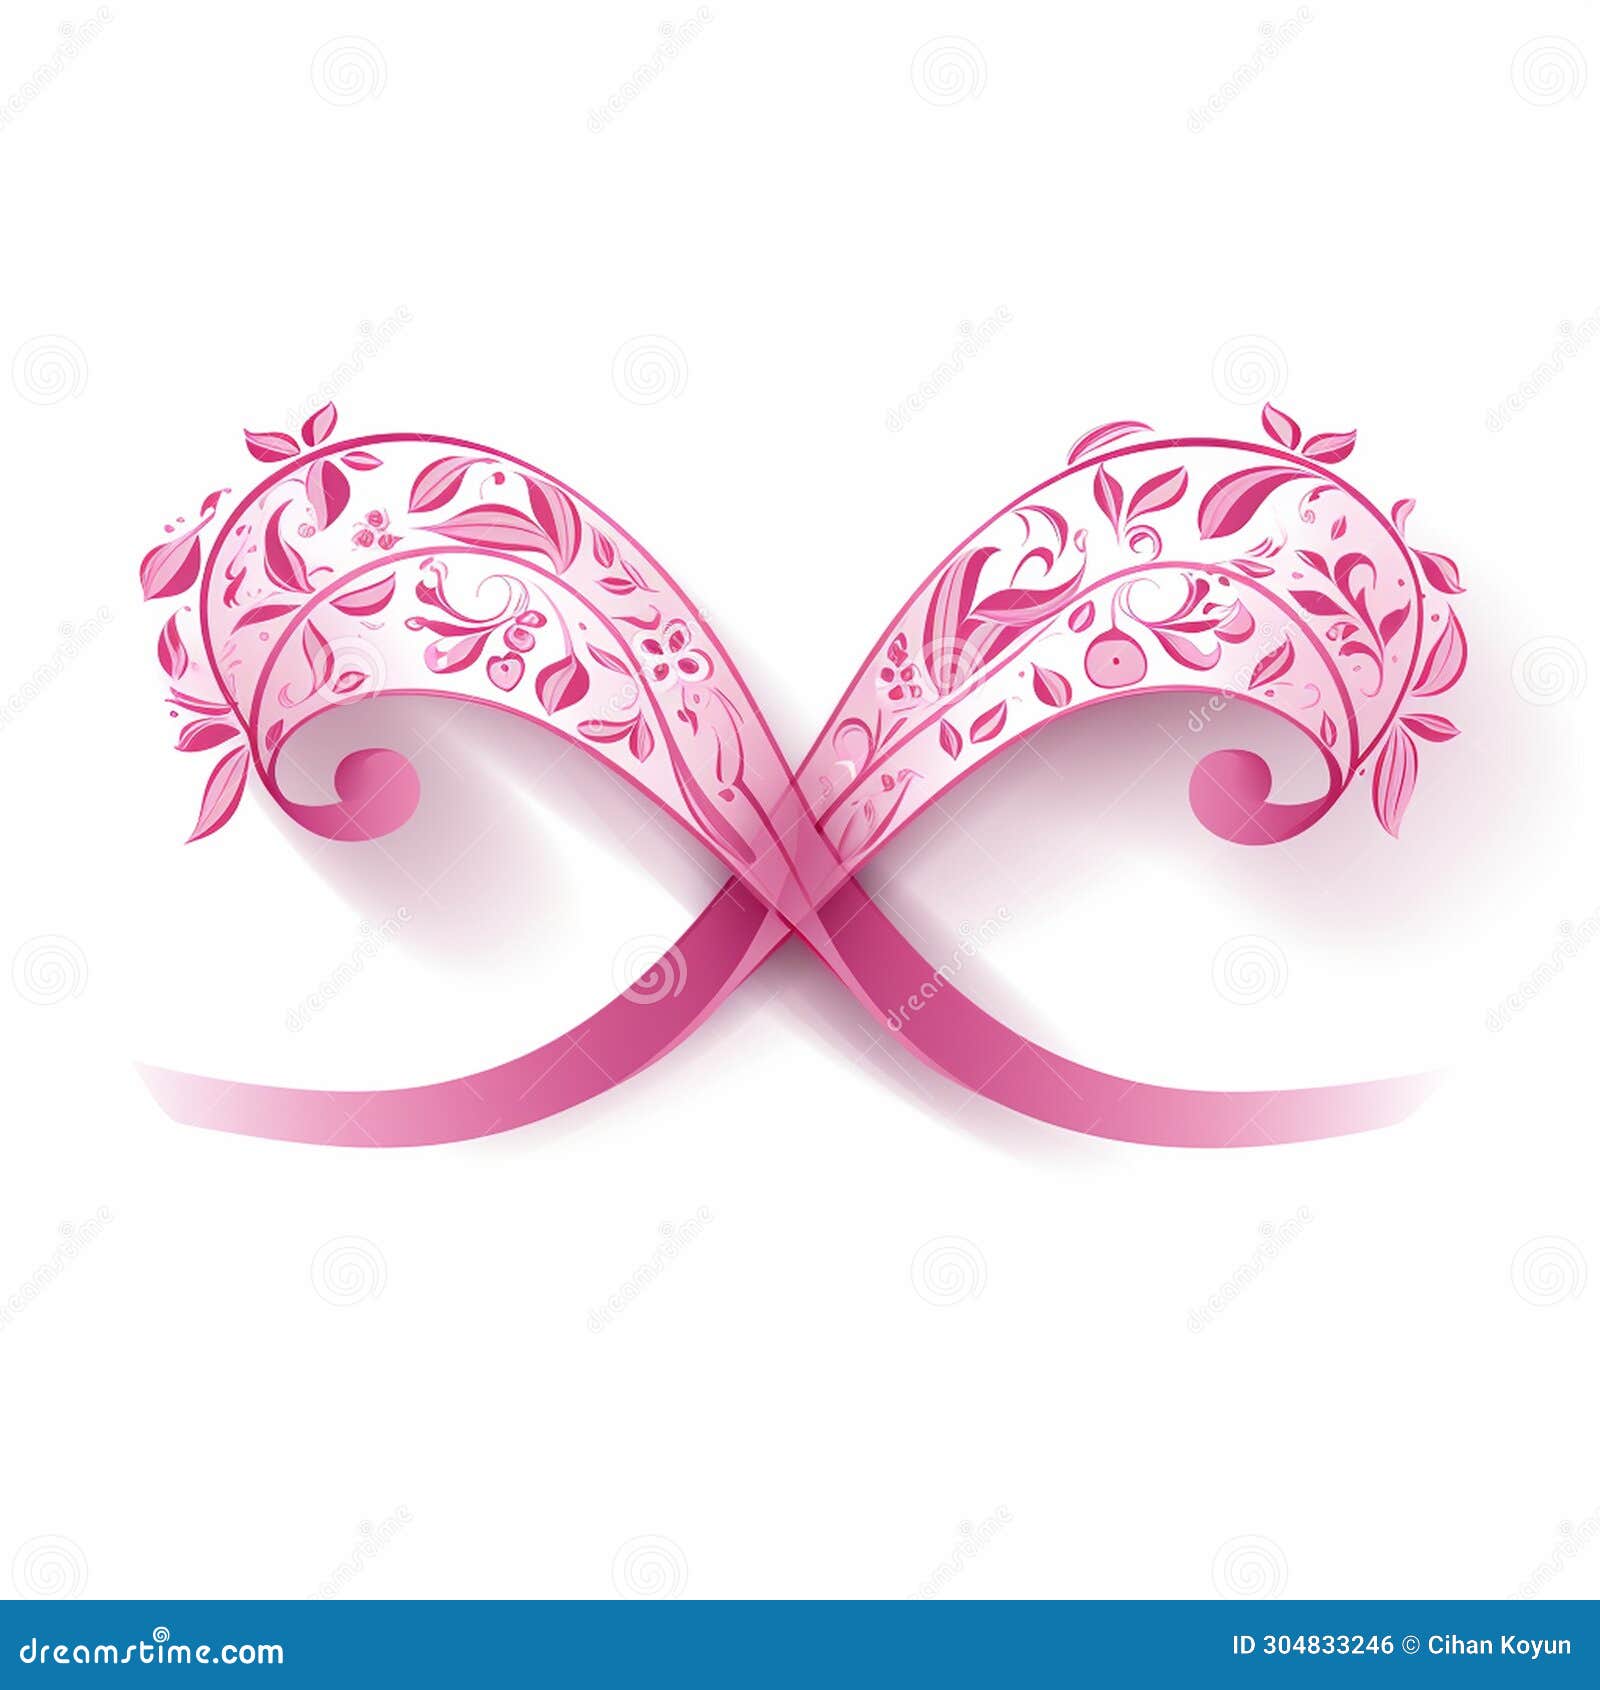 medicos pink ribbon neck ribbon breast cancer bagels purple ribbons pink ribbon support campaign star ribbon